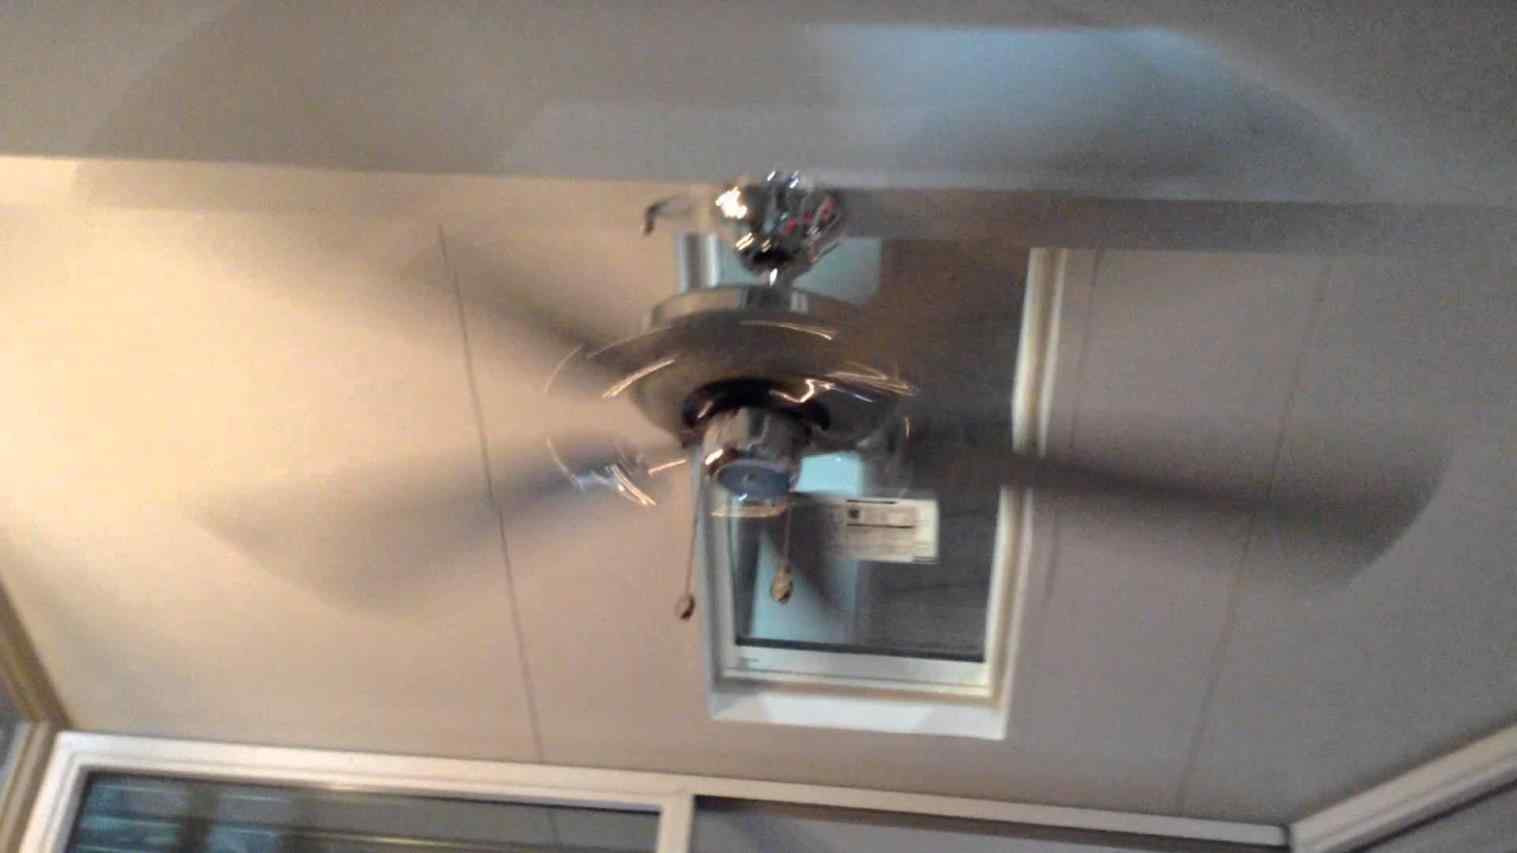 Noisy Bathroom Exhaust Fan
 Ceiling Exhaust Fan For Bathroom How To Replace A Noisy